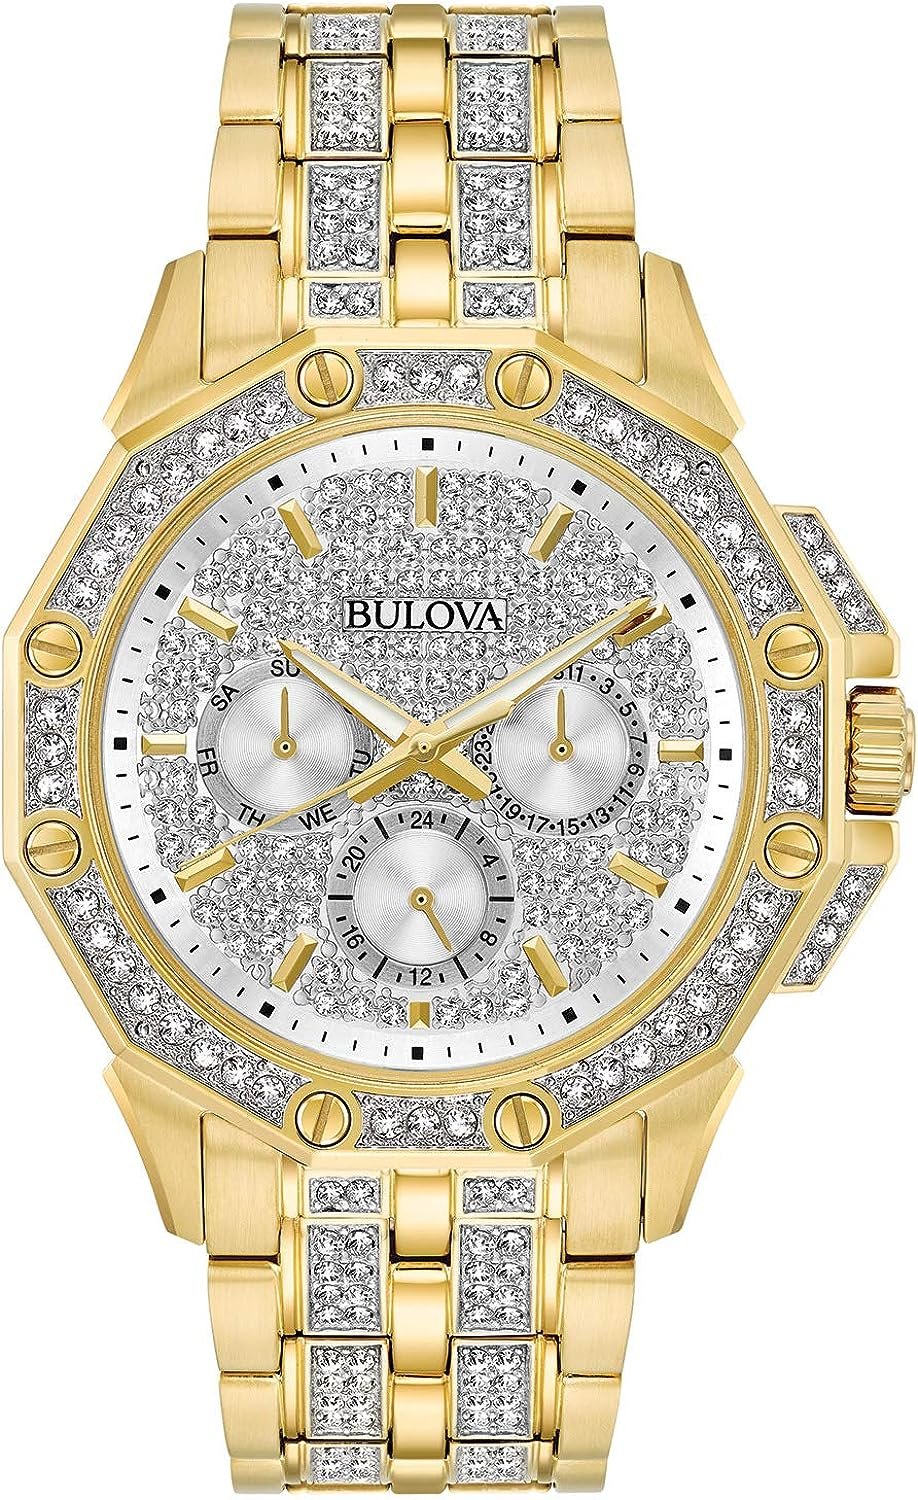 Bulova Mens Crystal Octava Chronograph Quartz Watch, Pave Crystal Dial